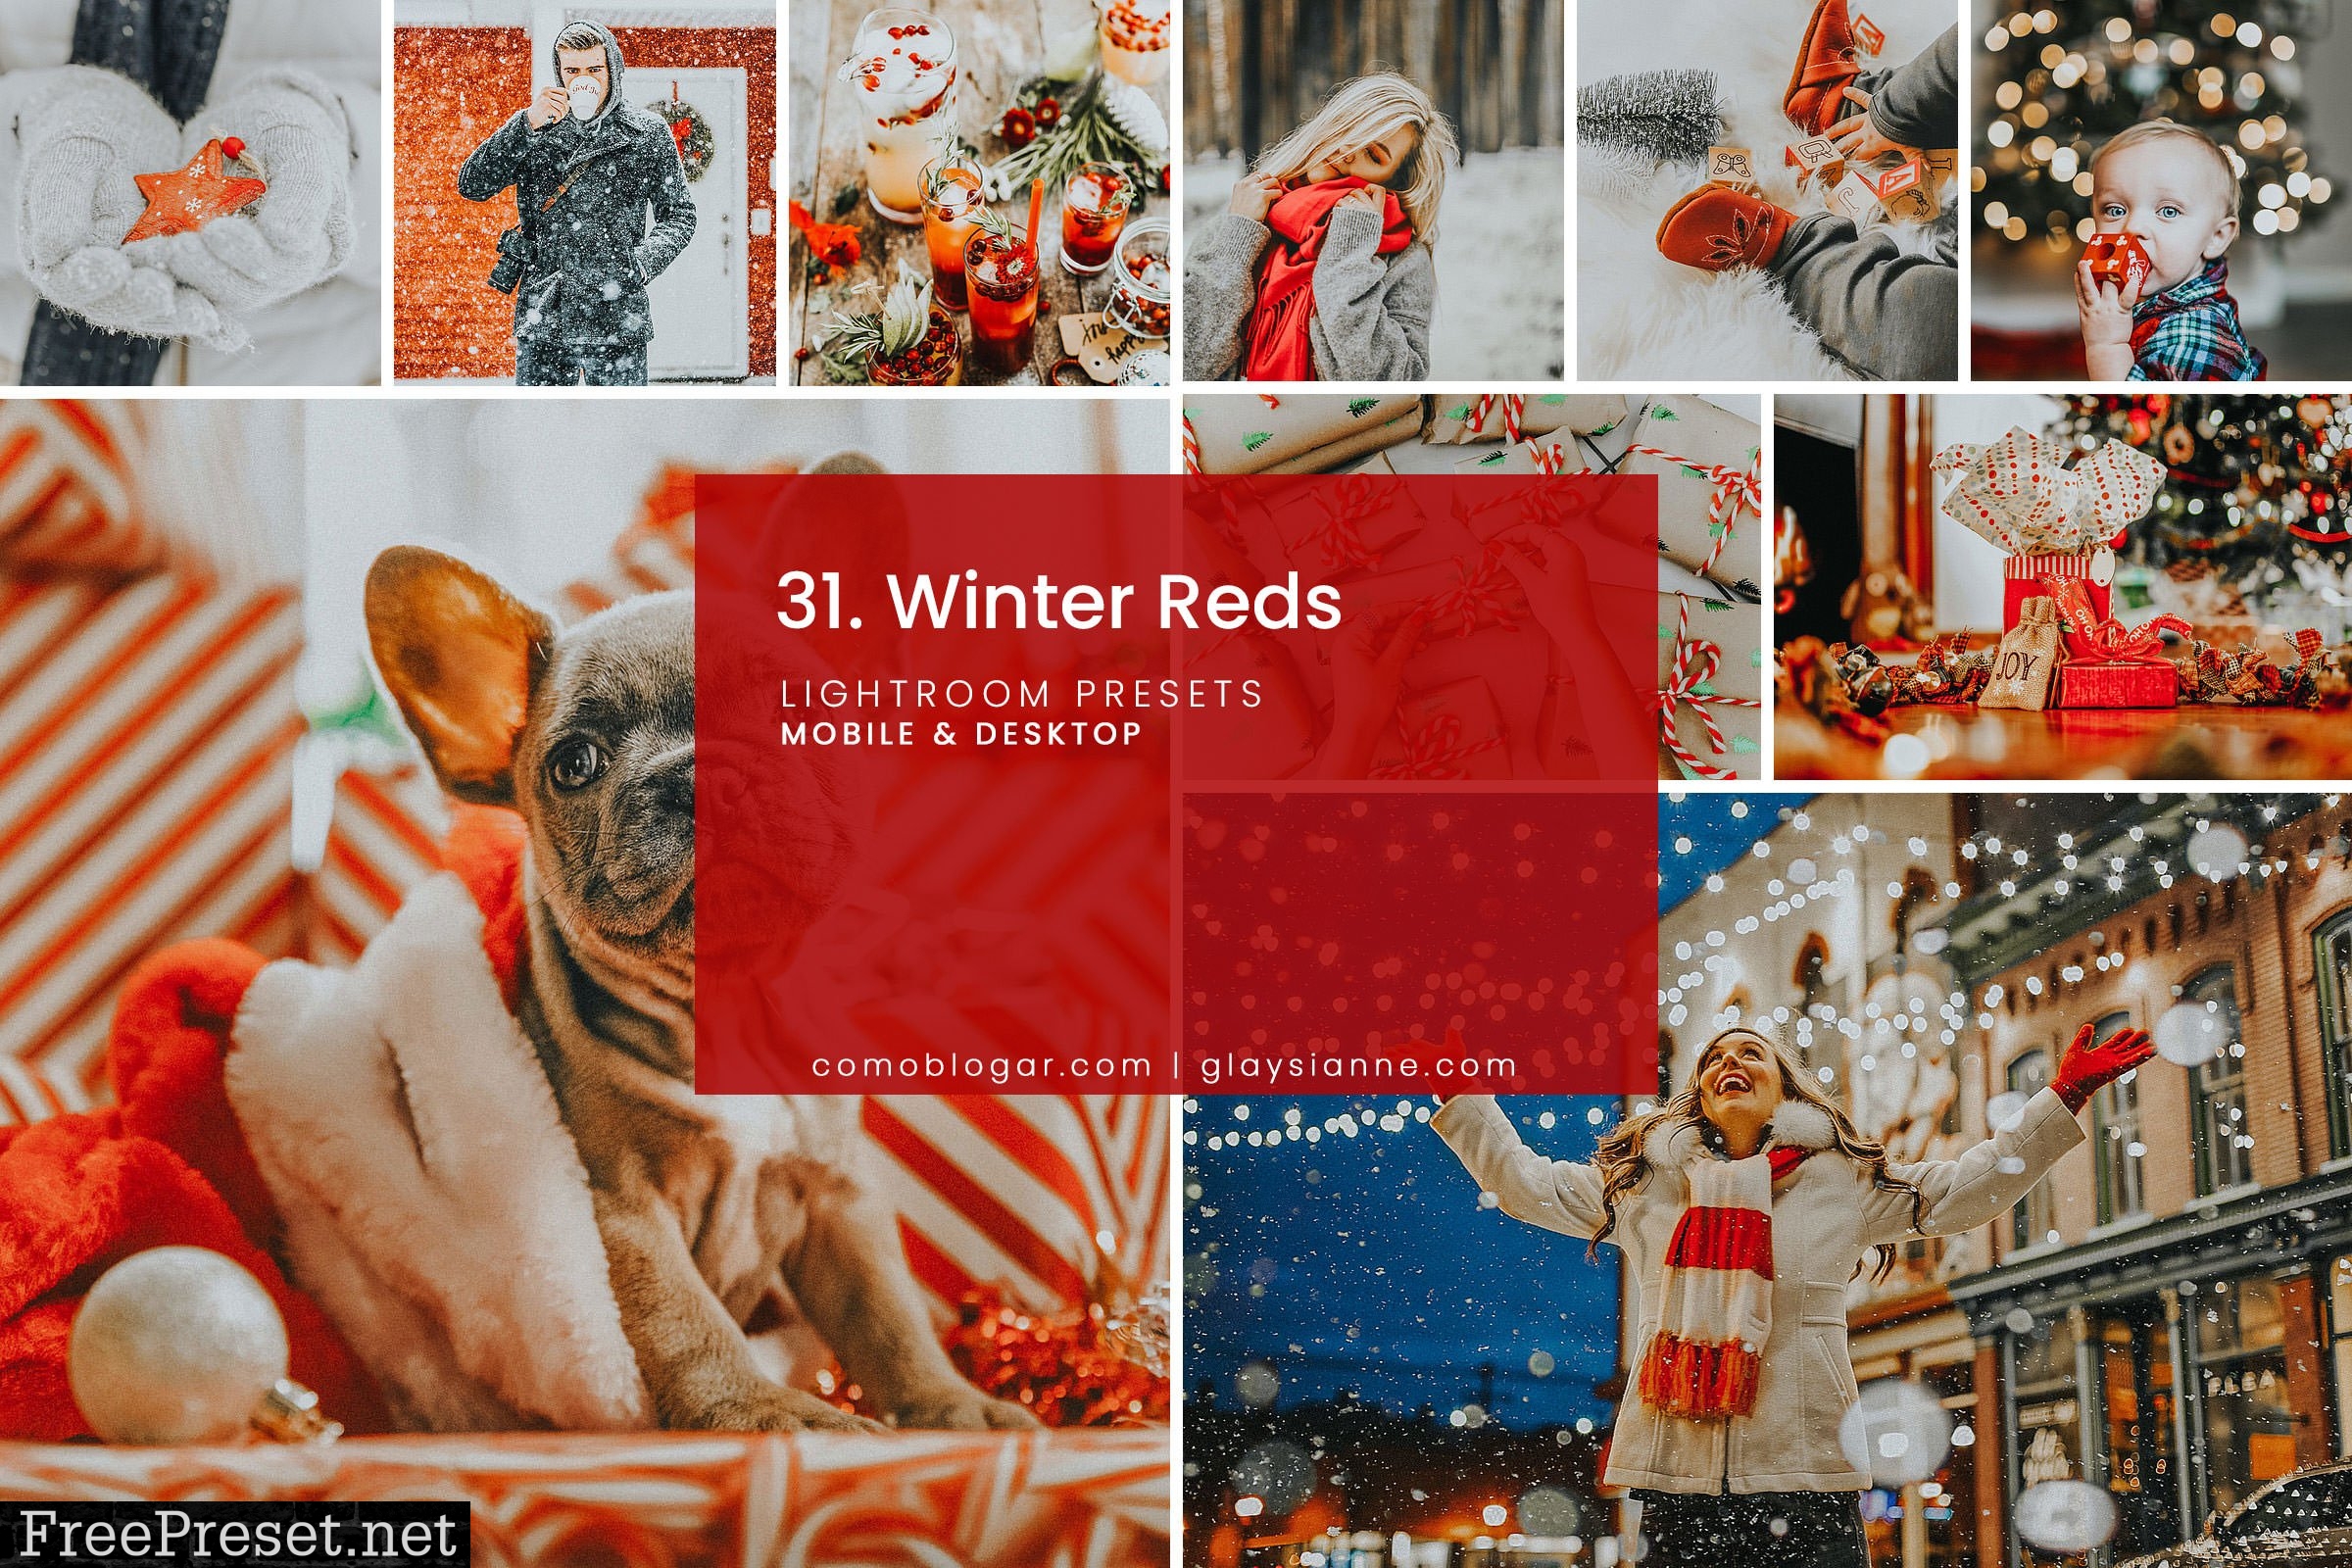 31. Winter Reds